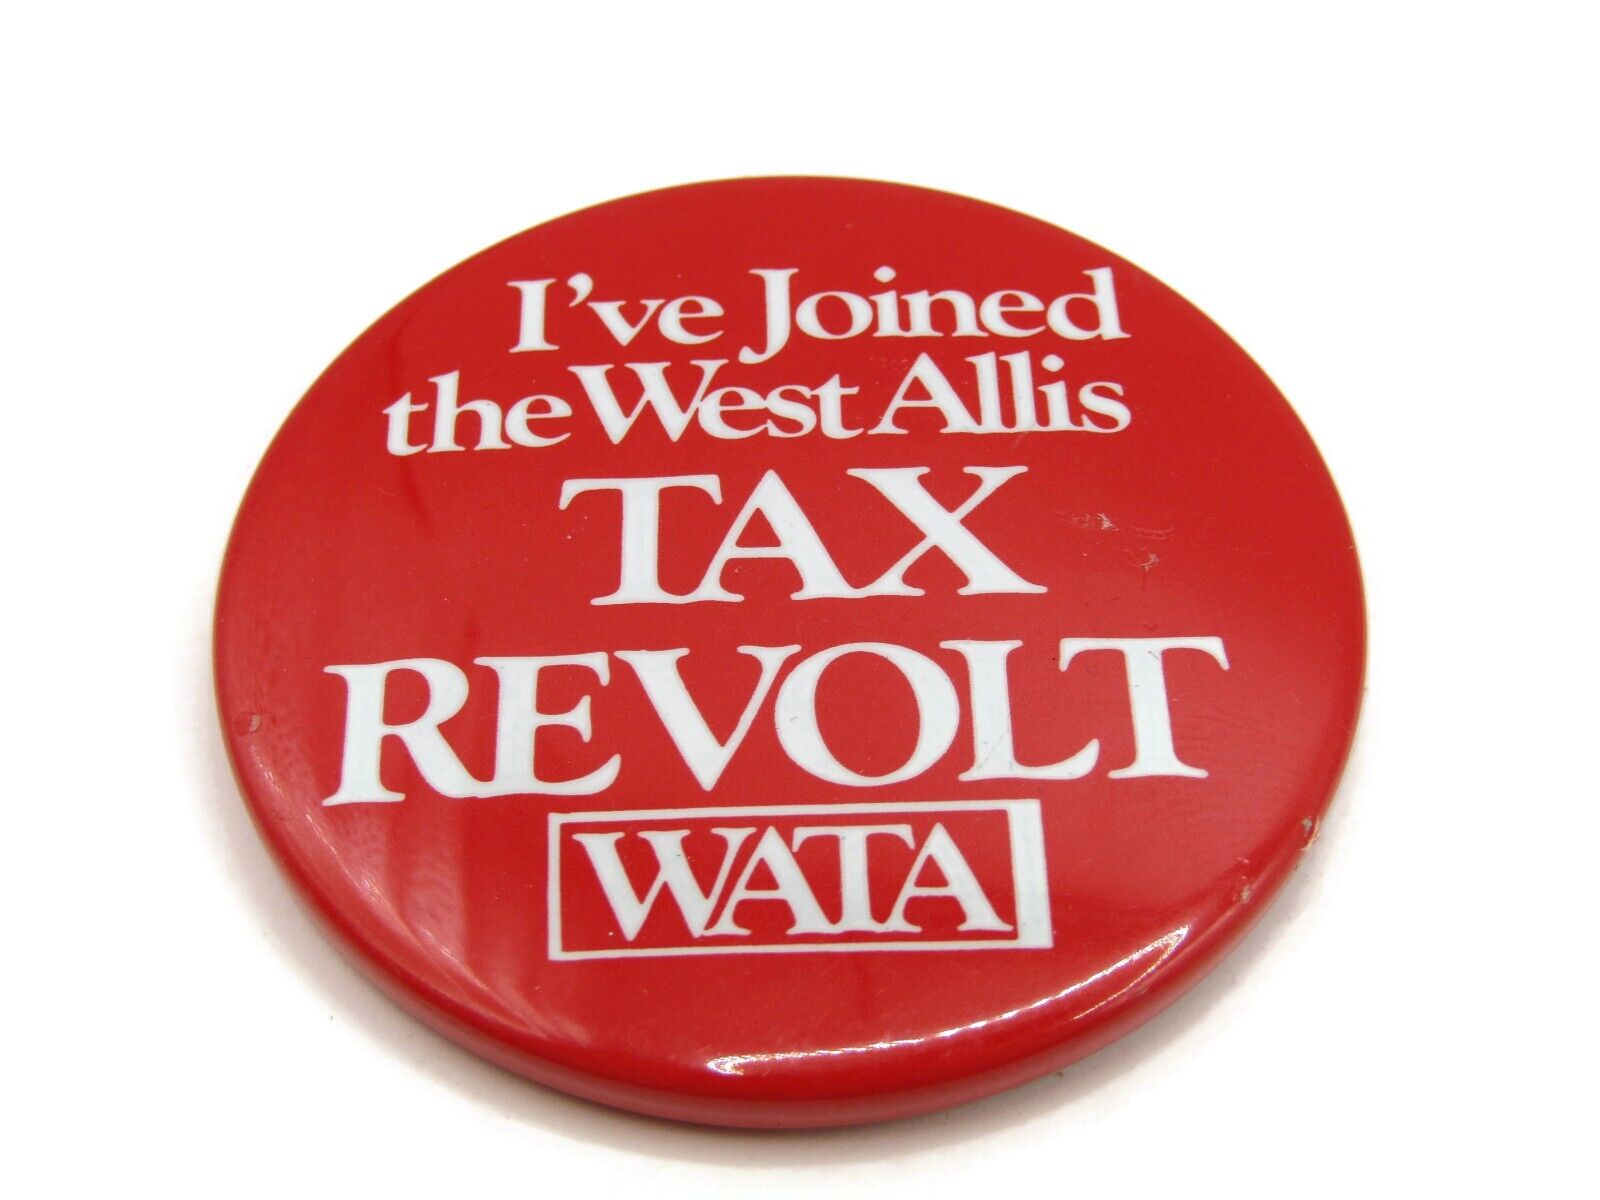 West Allis Tax Revolt WATA Pin Button Vintage